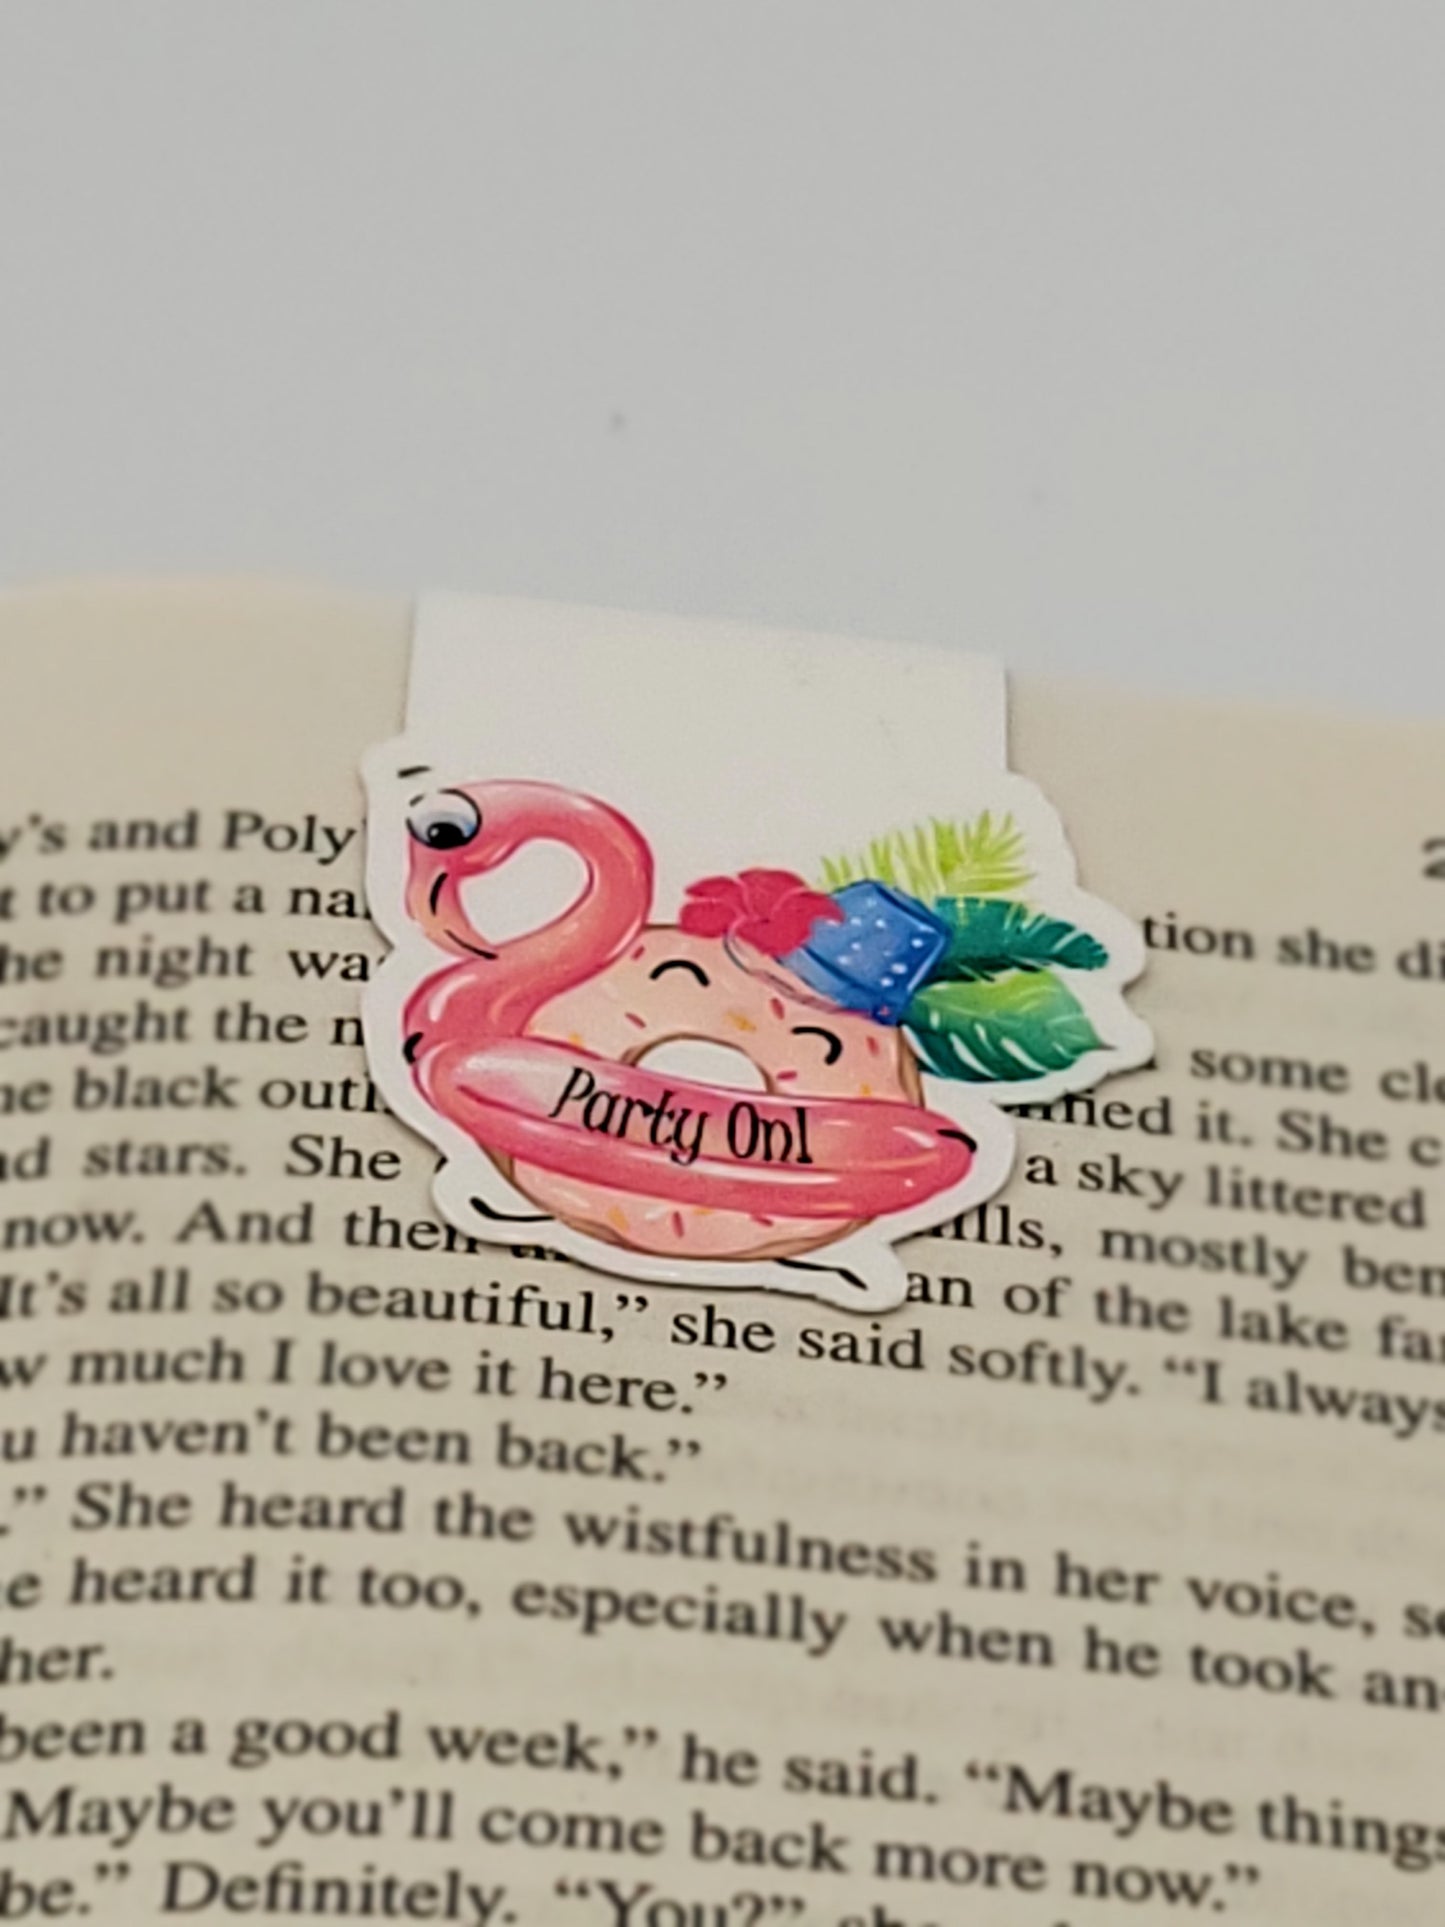 0139 - Donut Worry Flamingo - Magnetic Bookmark